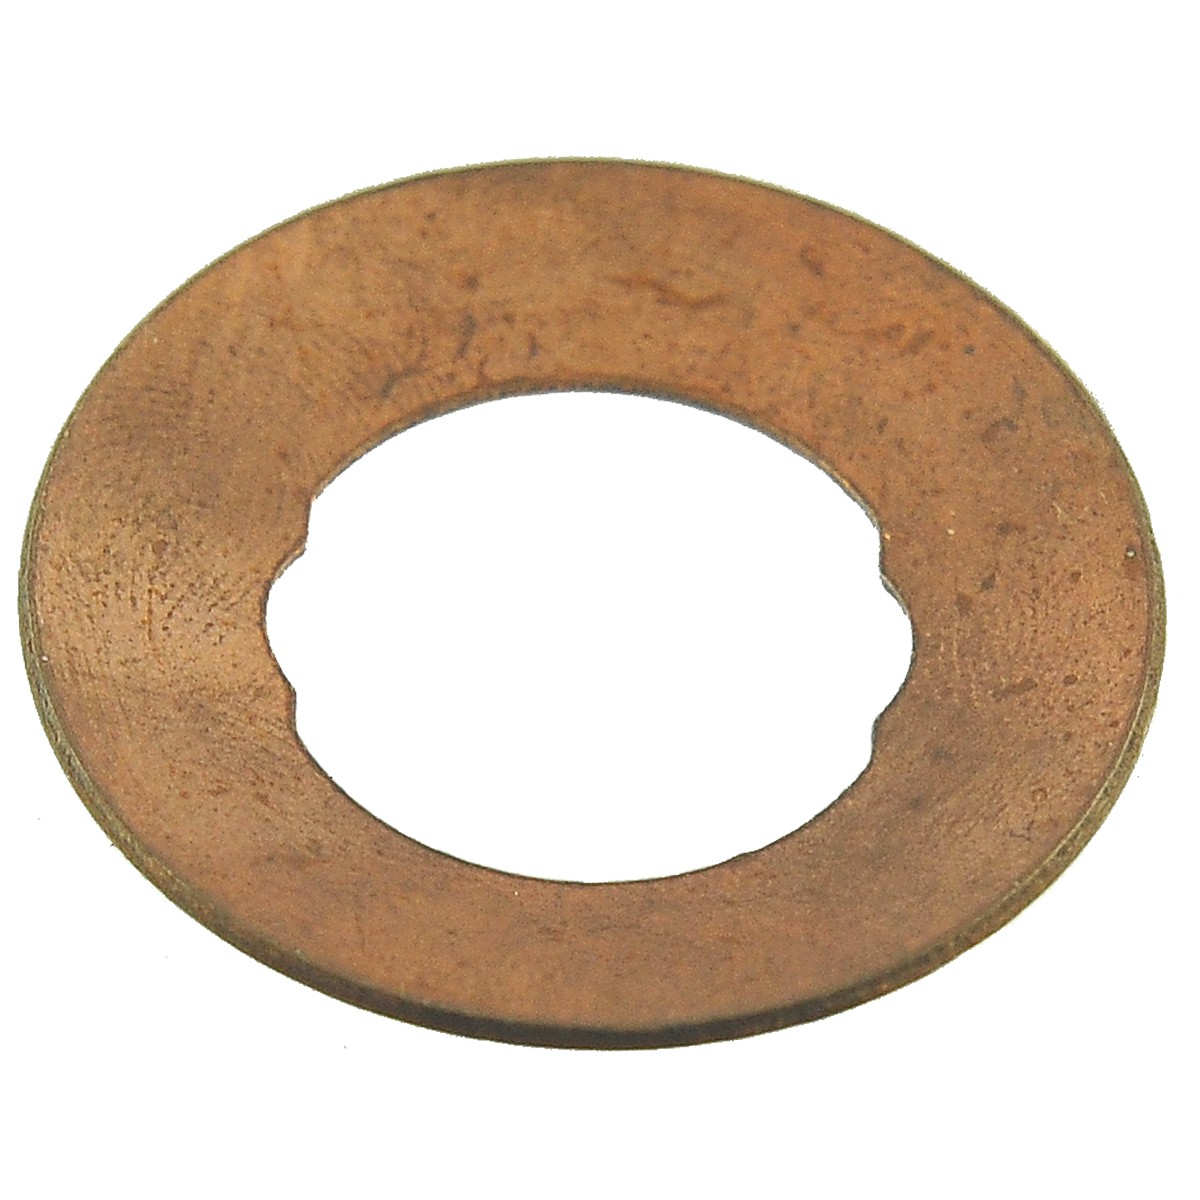 Copper washer / 21.20 x 37.50 mm / Iseki TS2510 / 1656-304-002-00 / 9-26-107-01